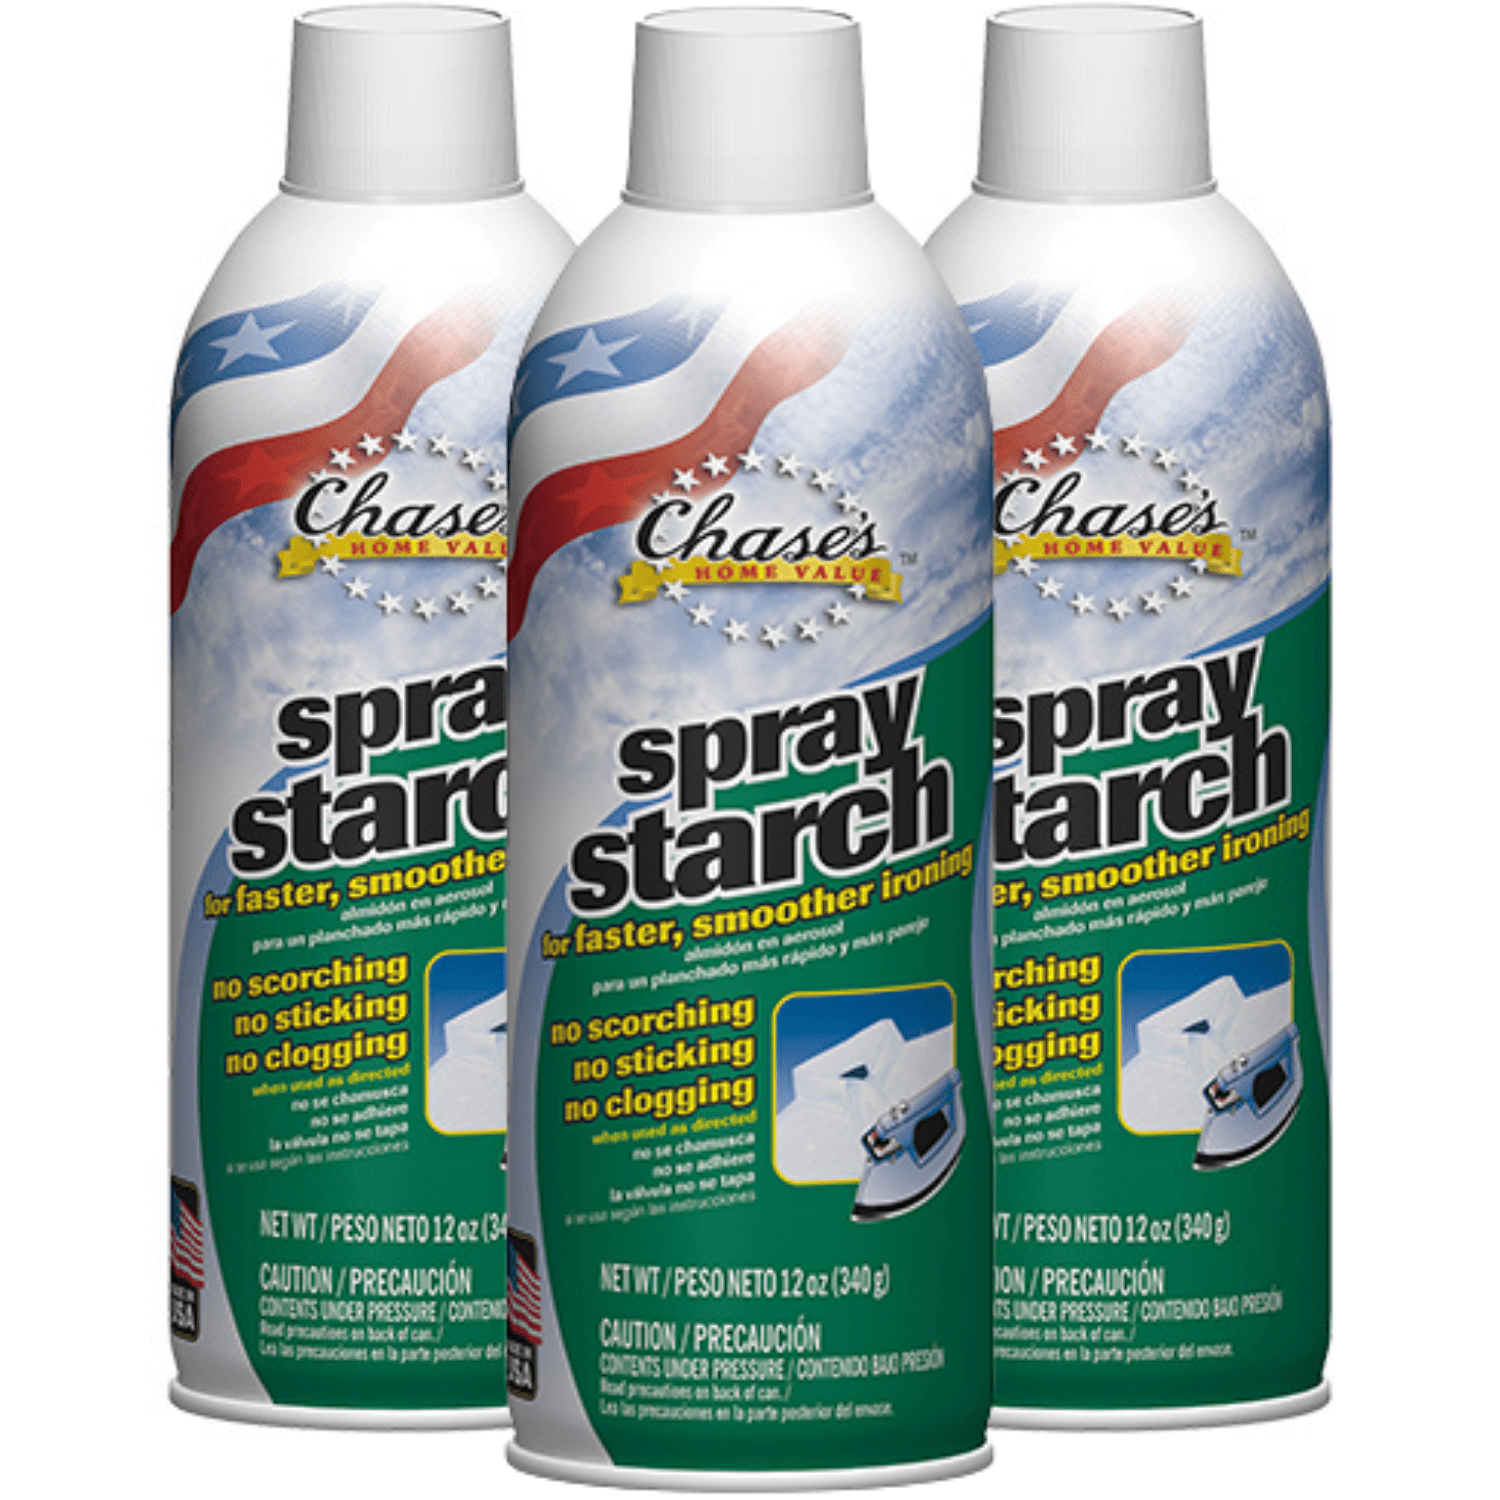  Laundry Starch Spray, Faultless Heavy Spray Starch 20